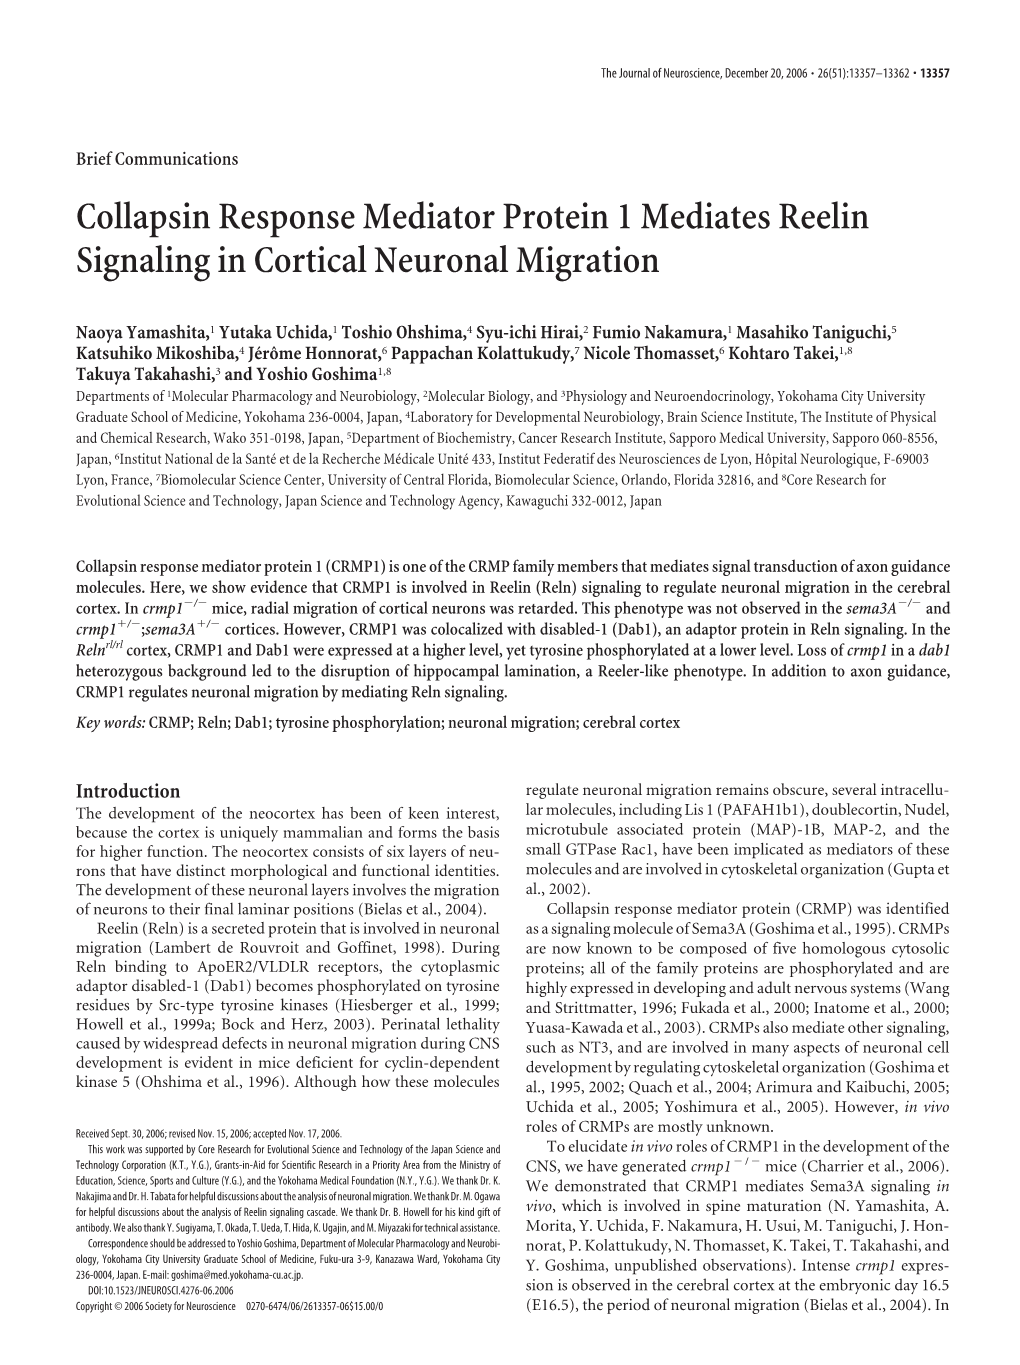 Collapsin Response Mediator Protein 1 Mediates Reelin Signaling in Cortical Neuronal Migration